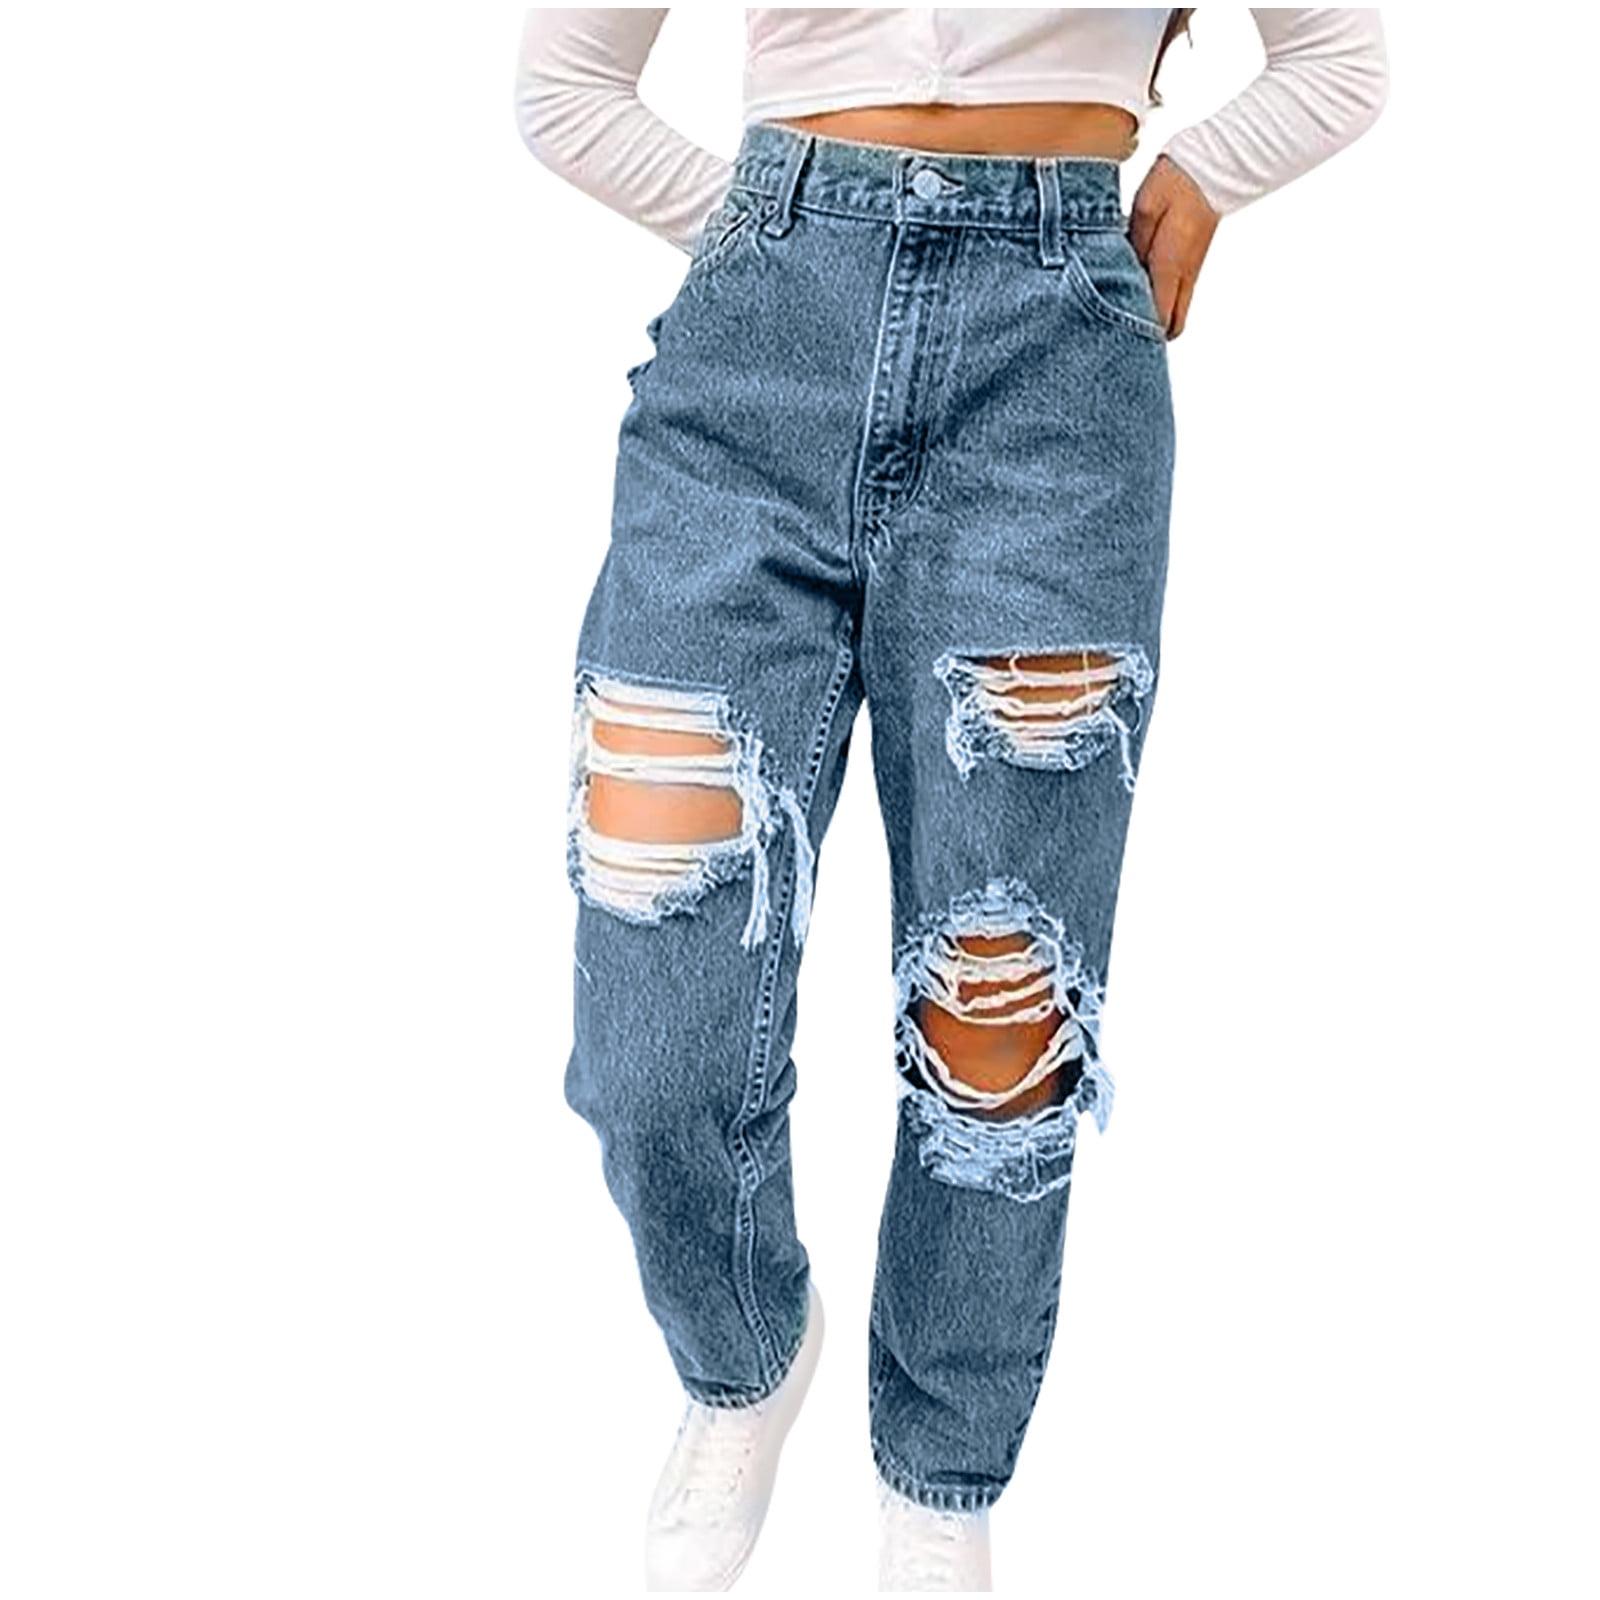 TIANEK Bootcut Jeans for Women Fashion Full-Length Women Jeans